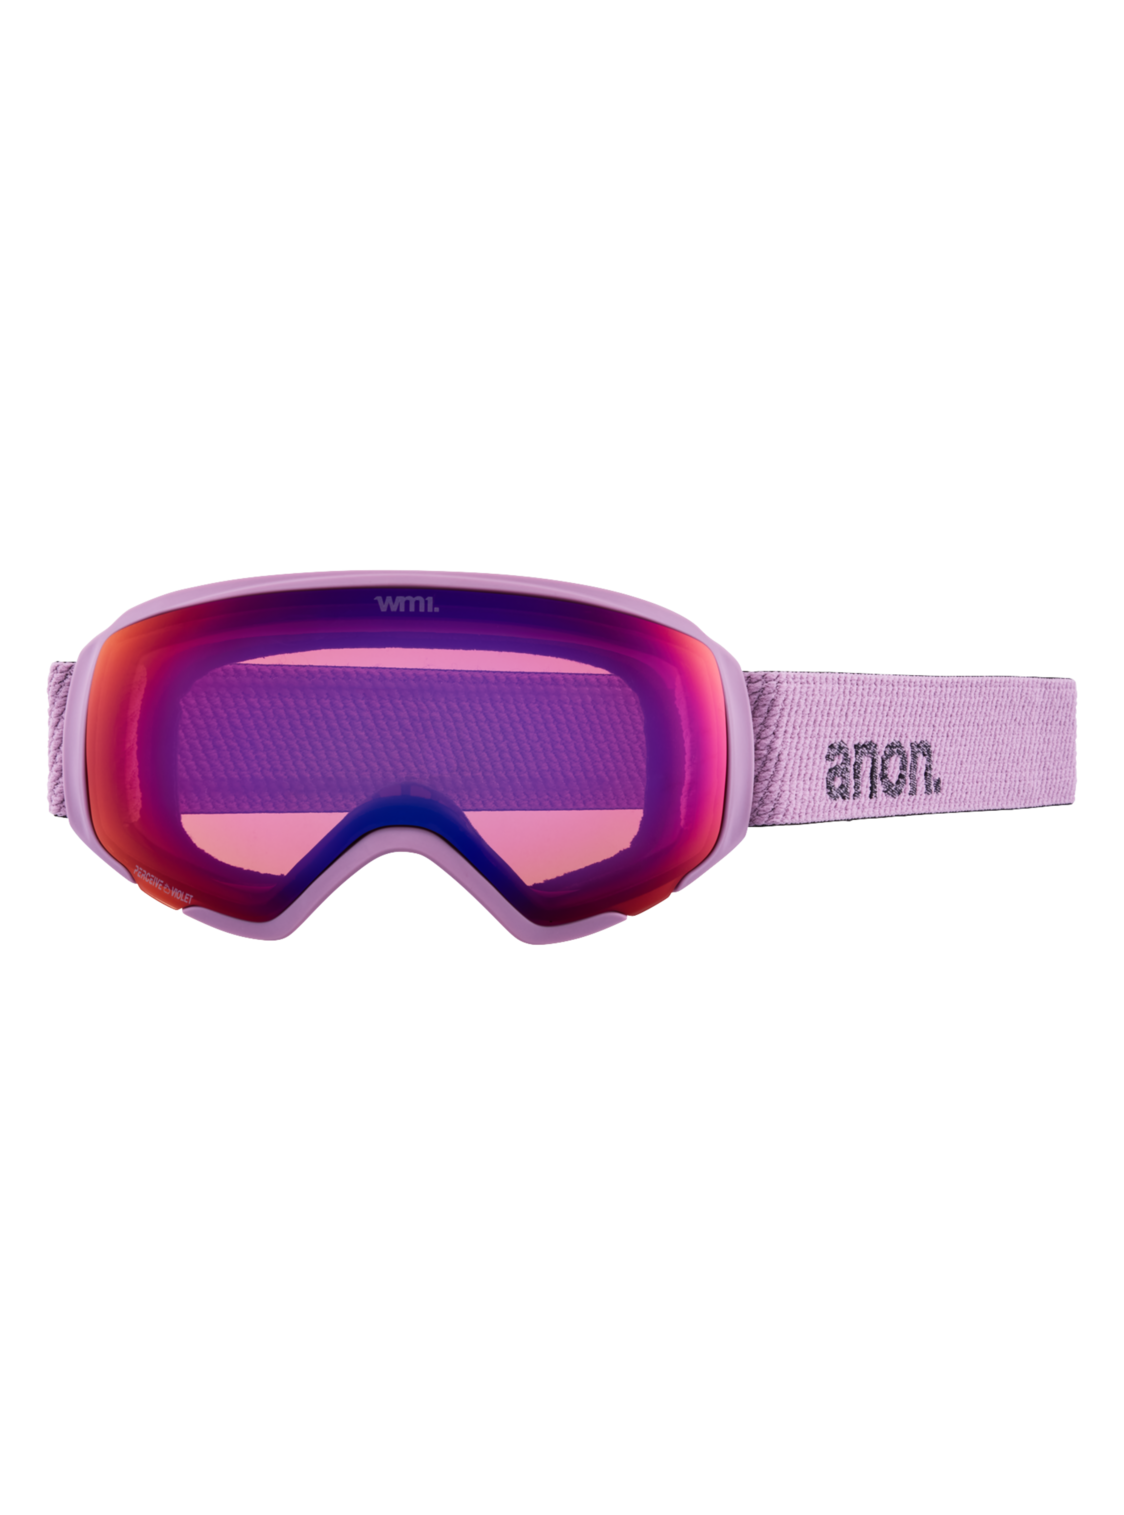 Anon WM1 goggle purple / perceive variable violet (met extra lens en MFI masker)